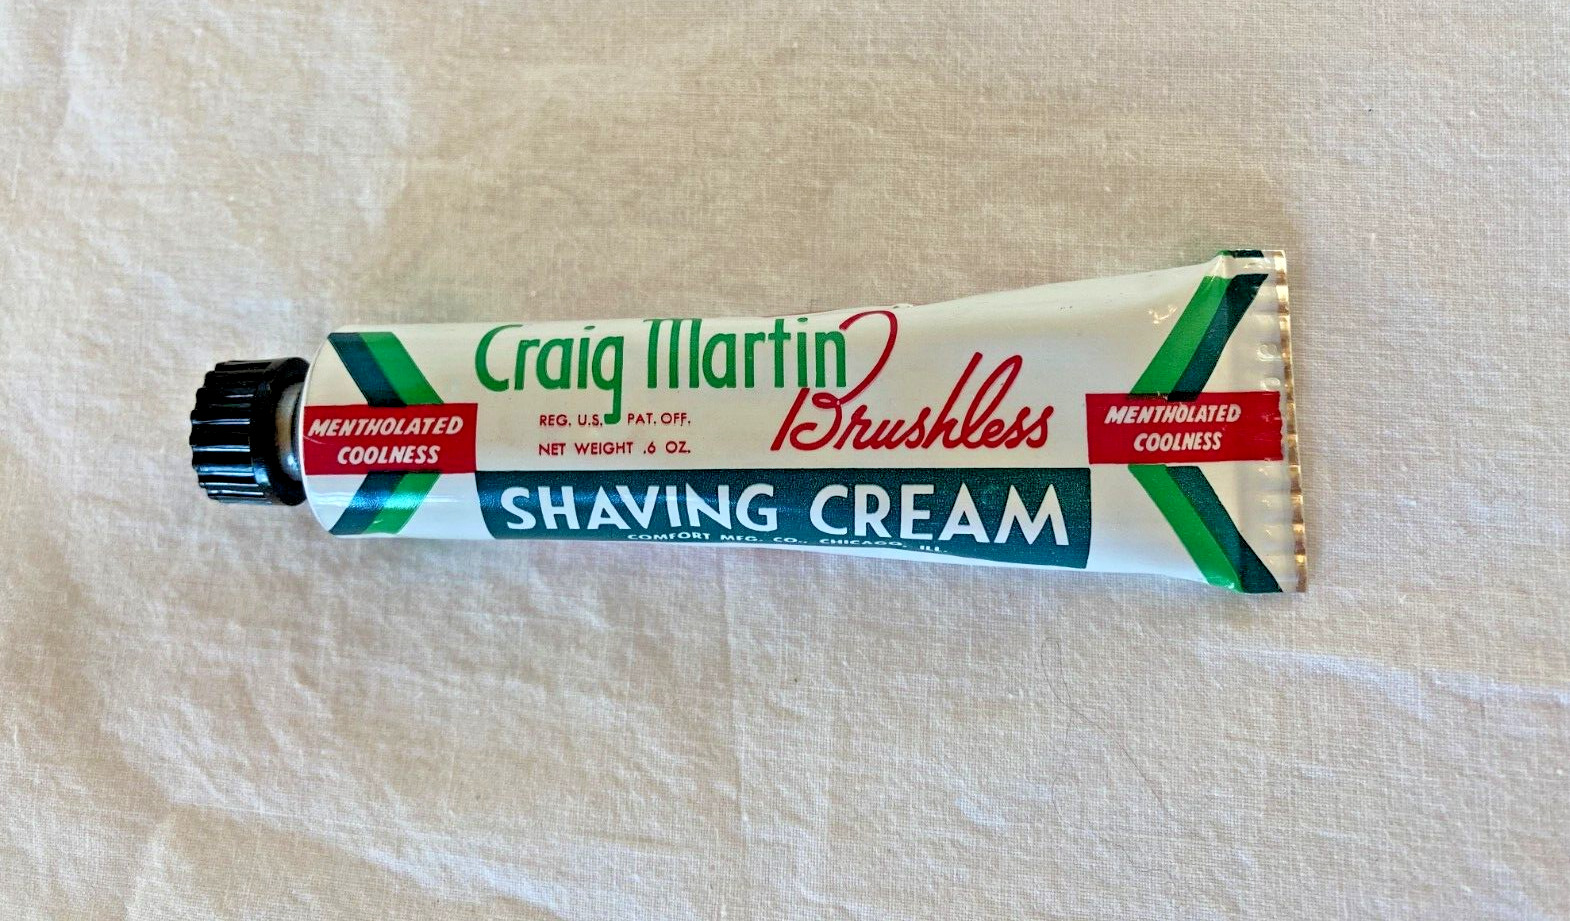 Vintage Craig Martin Brushless Shaving Cream Tube Govt Issue? Travel Size